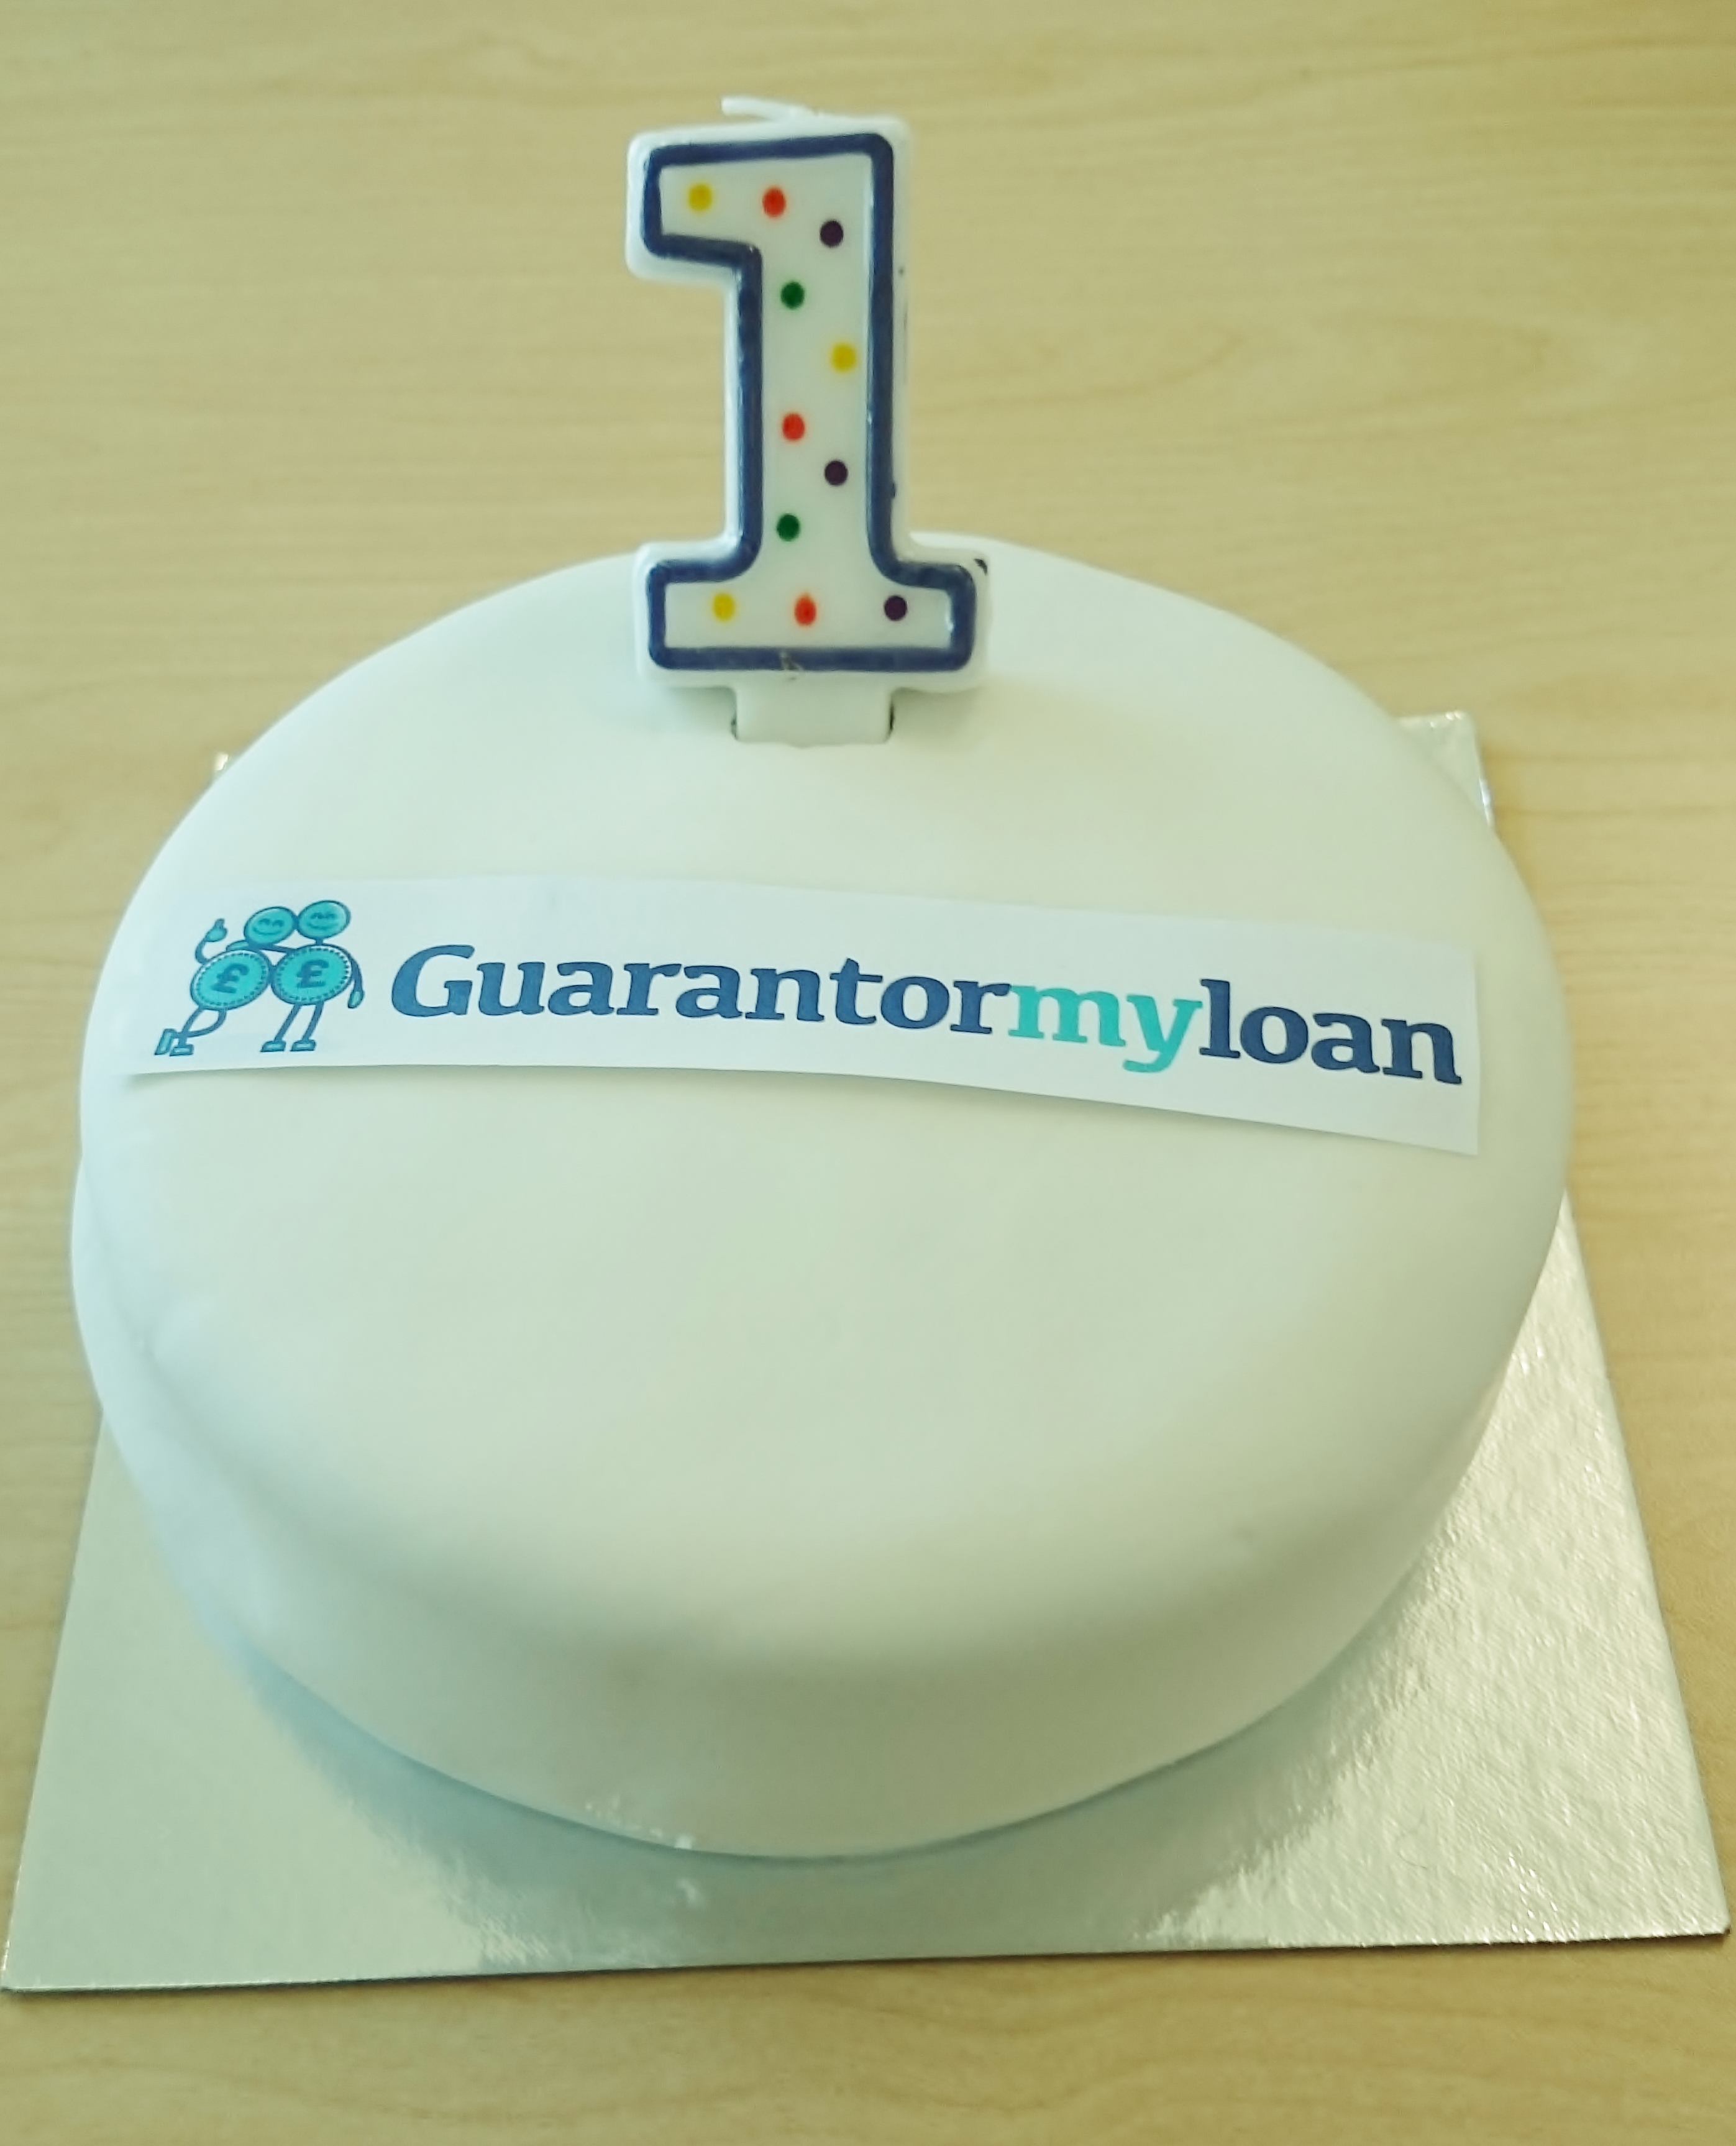 Birthday Cake Guarantor My Loan